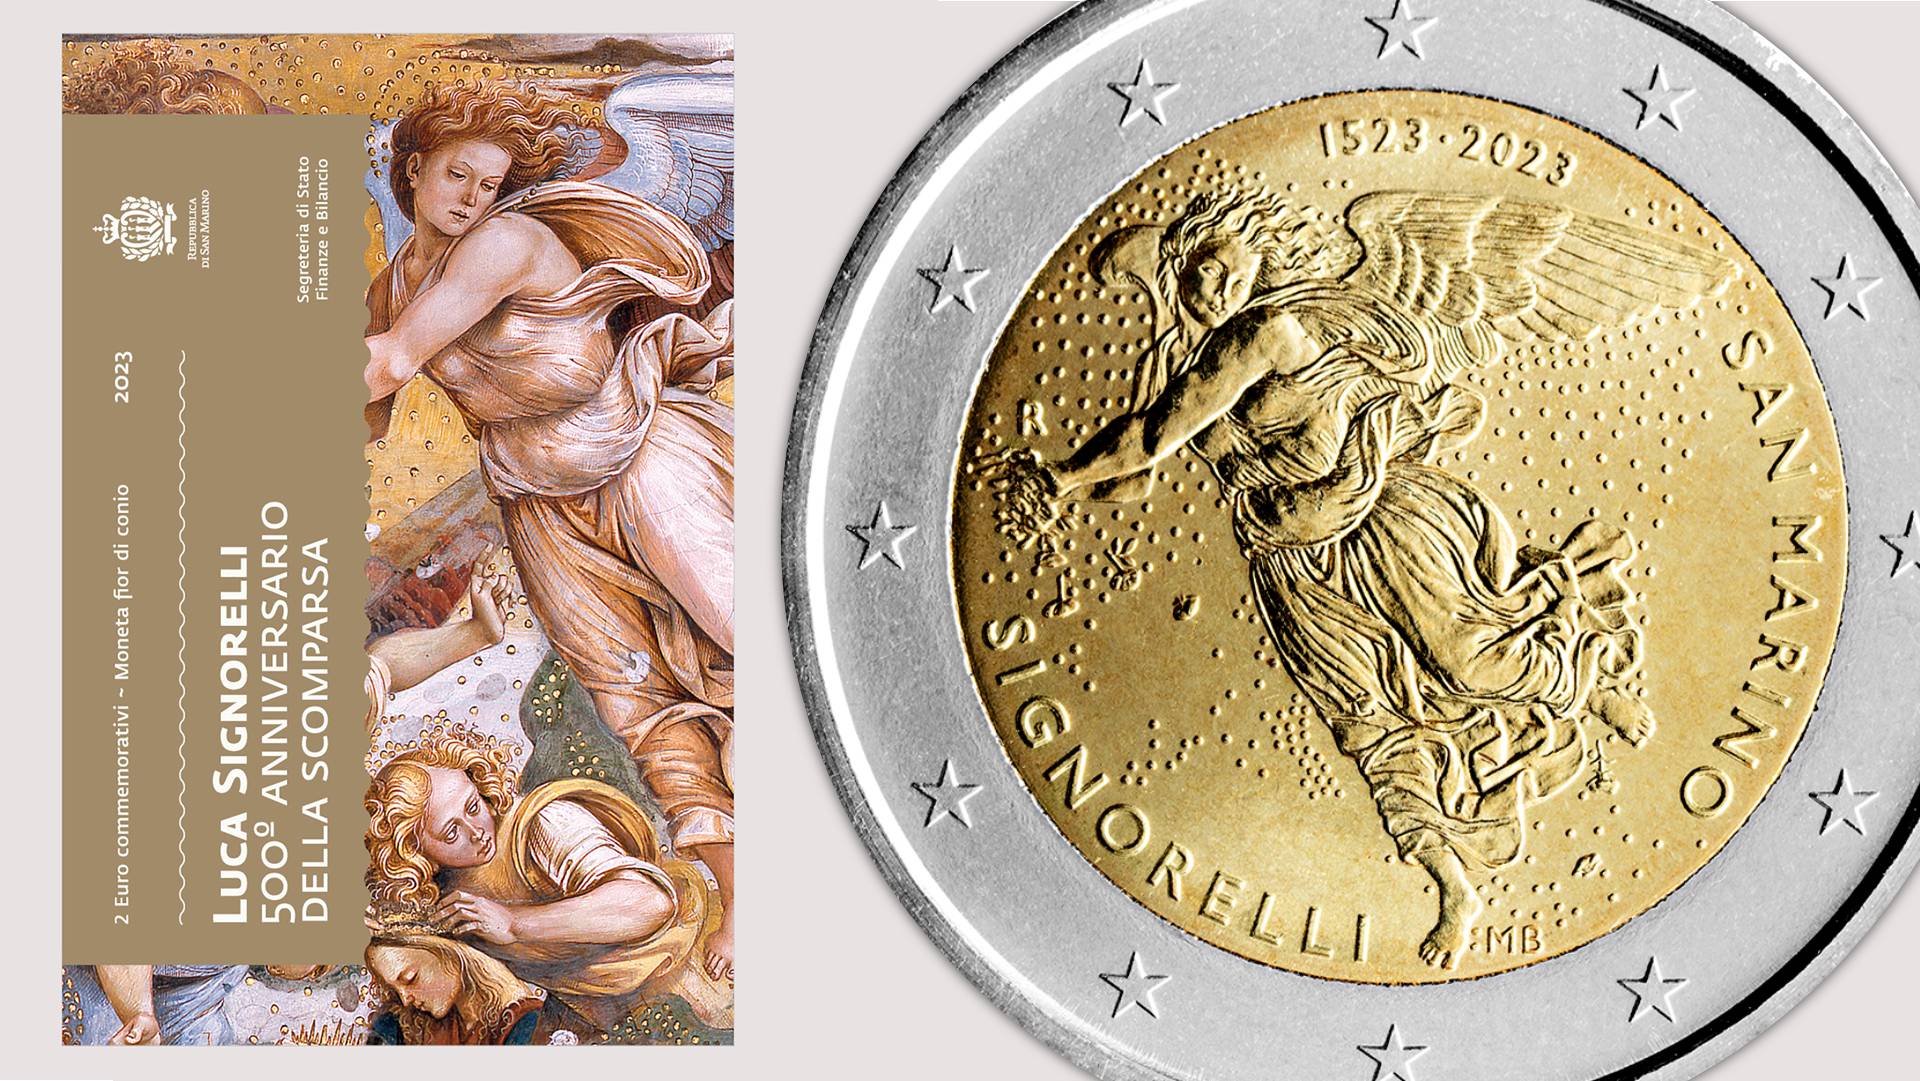 signorelli michelangelo raffaello arte pittura italia rinascimento 2 euro san marino moneta marta bonifacio